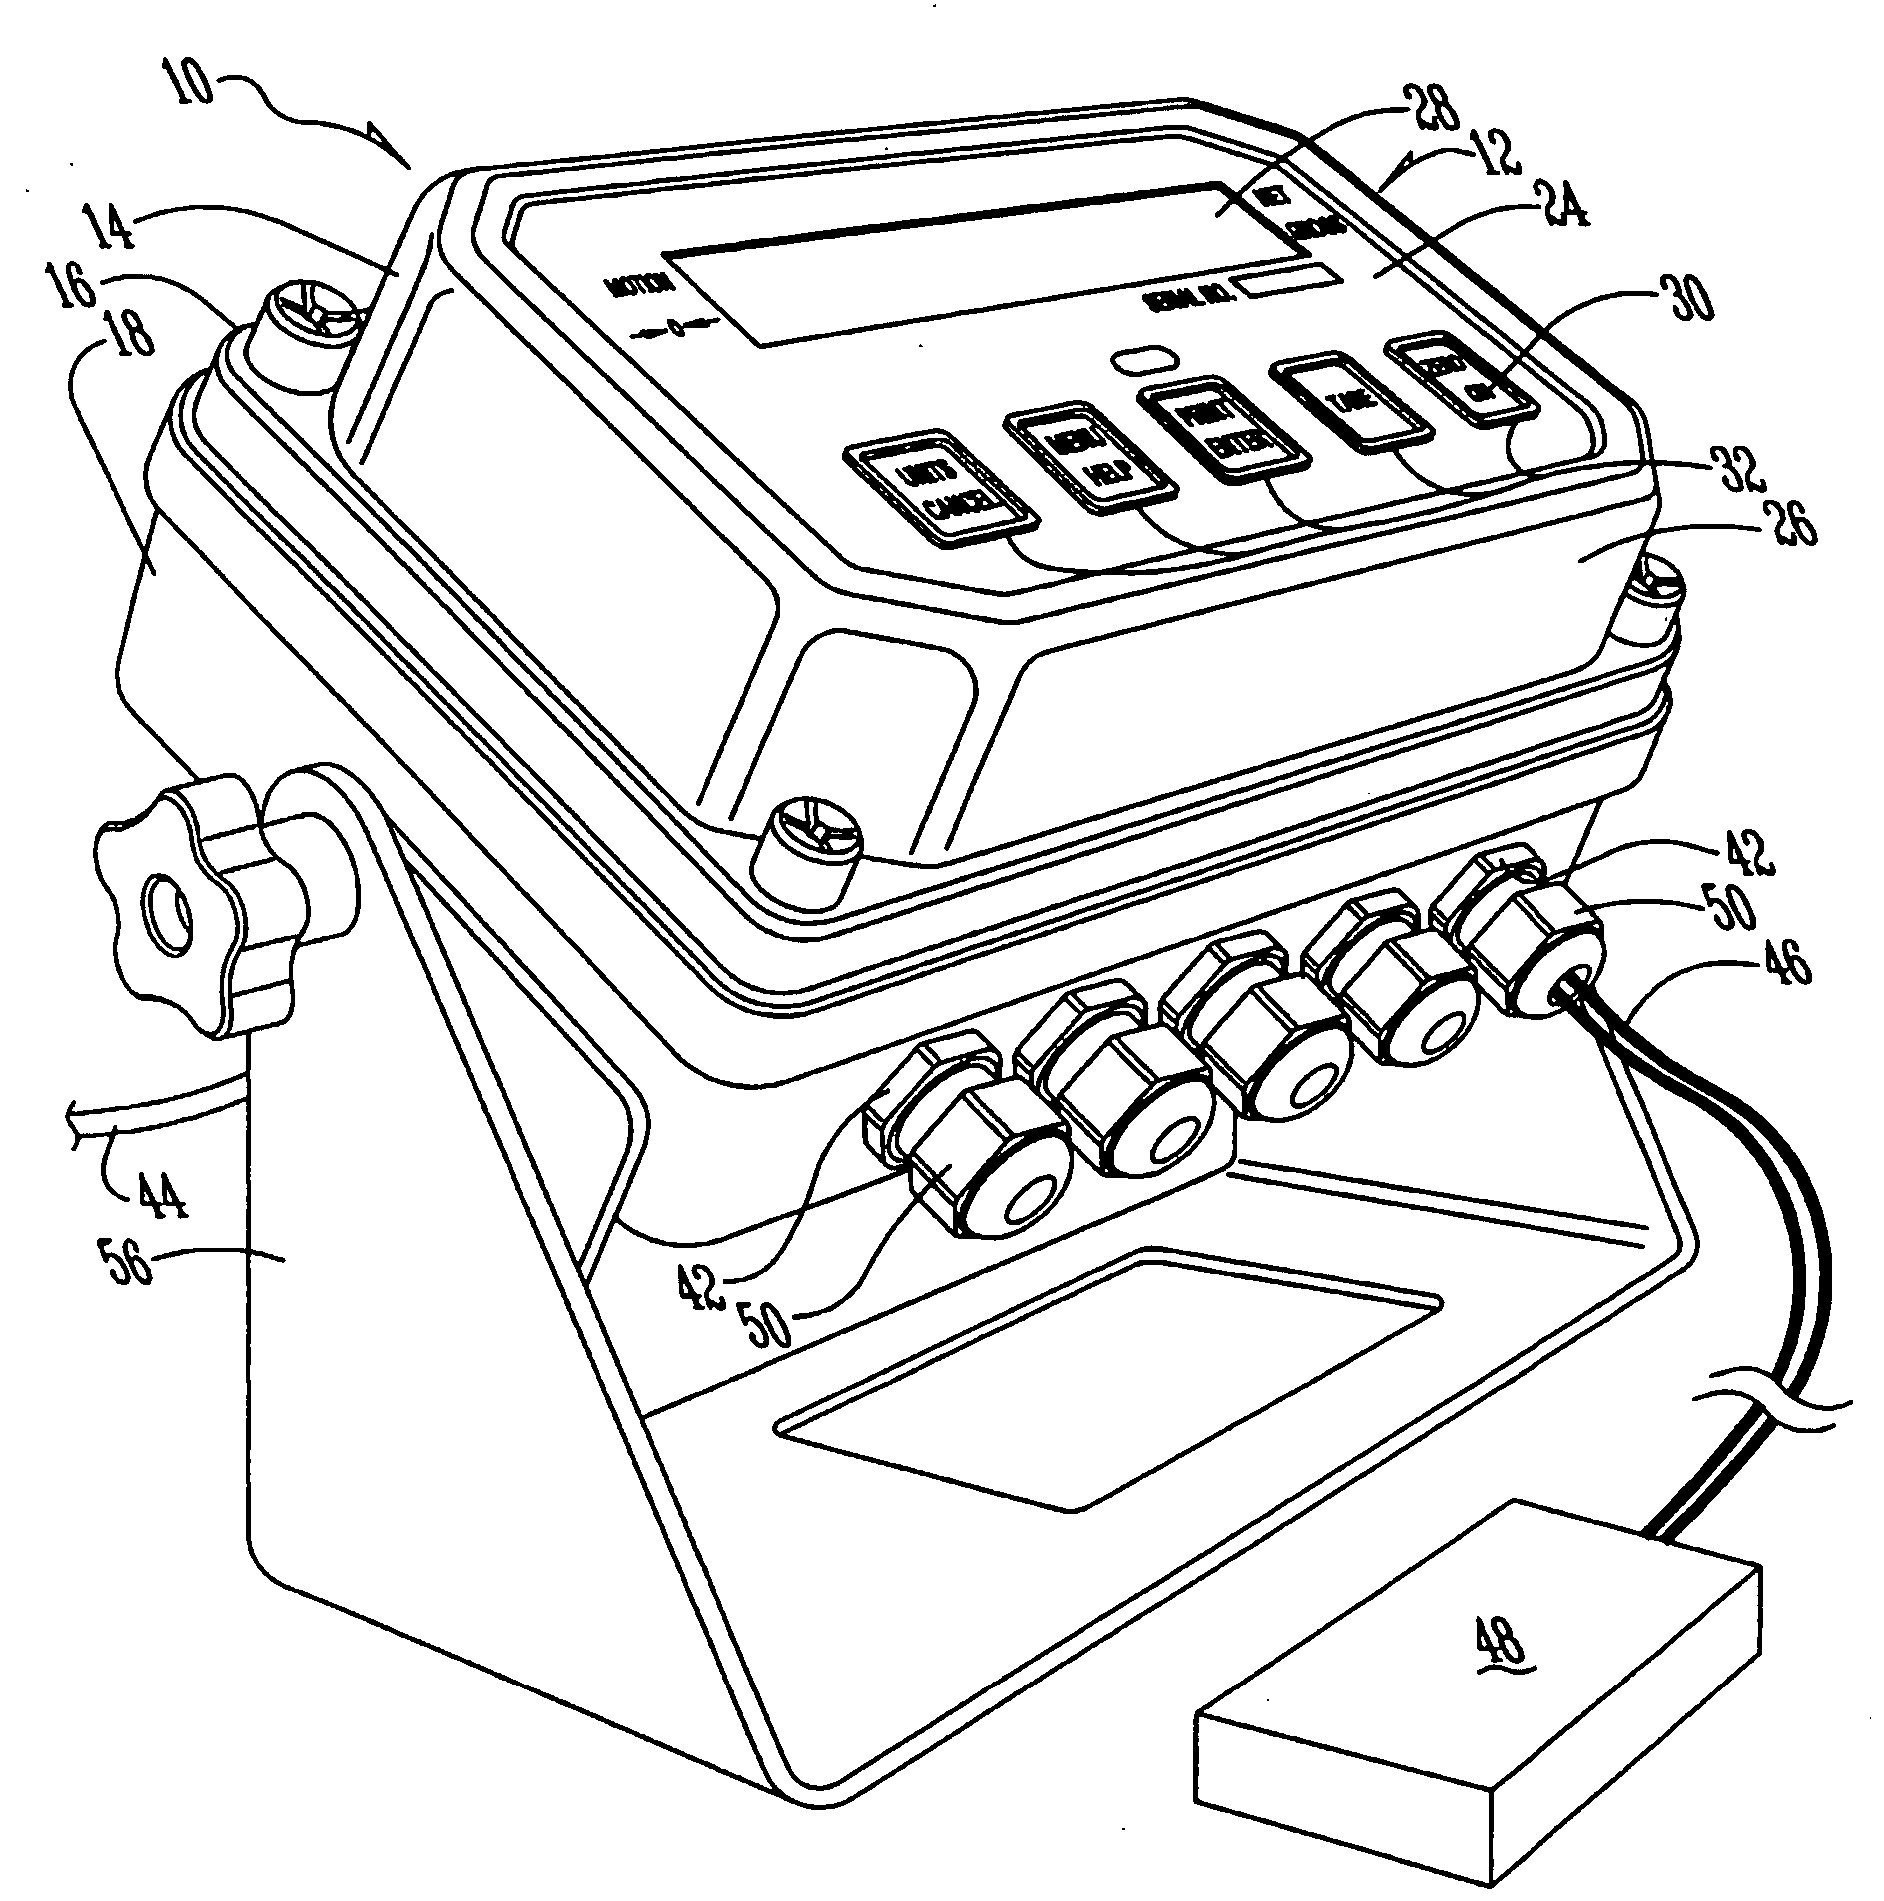 Modular sealed portable digital electronic controller